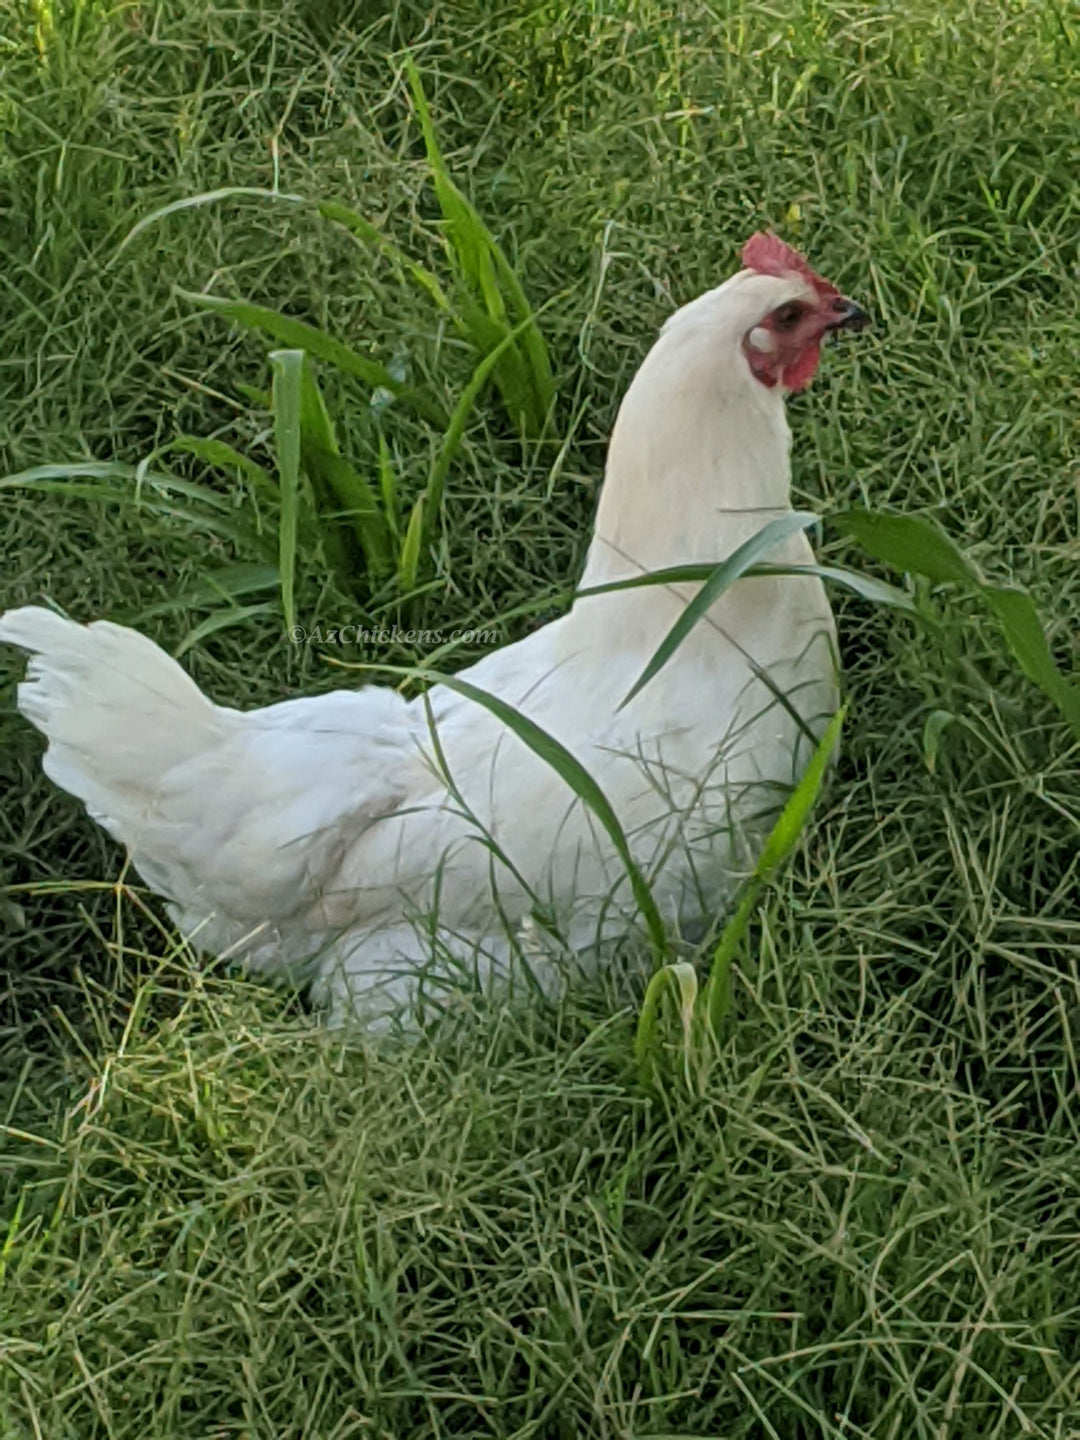 White Bresse Hatching Eggs